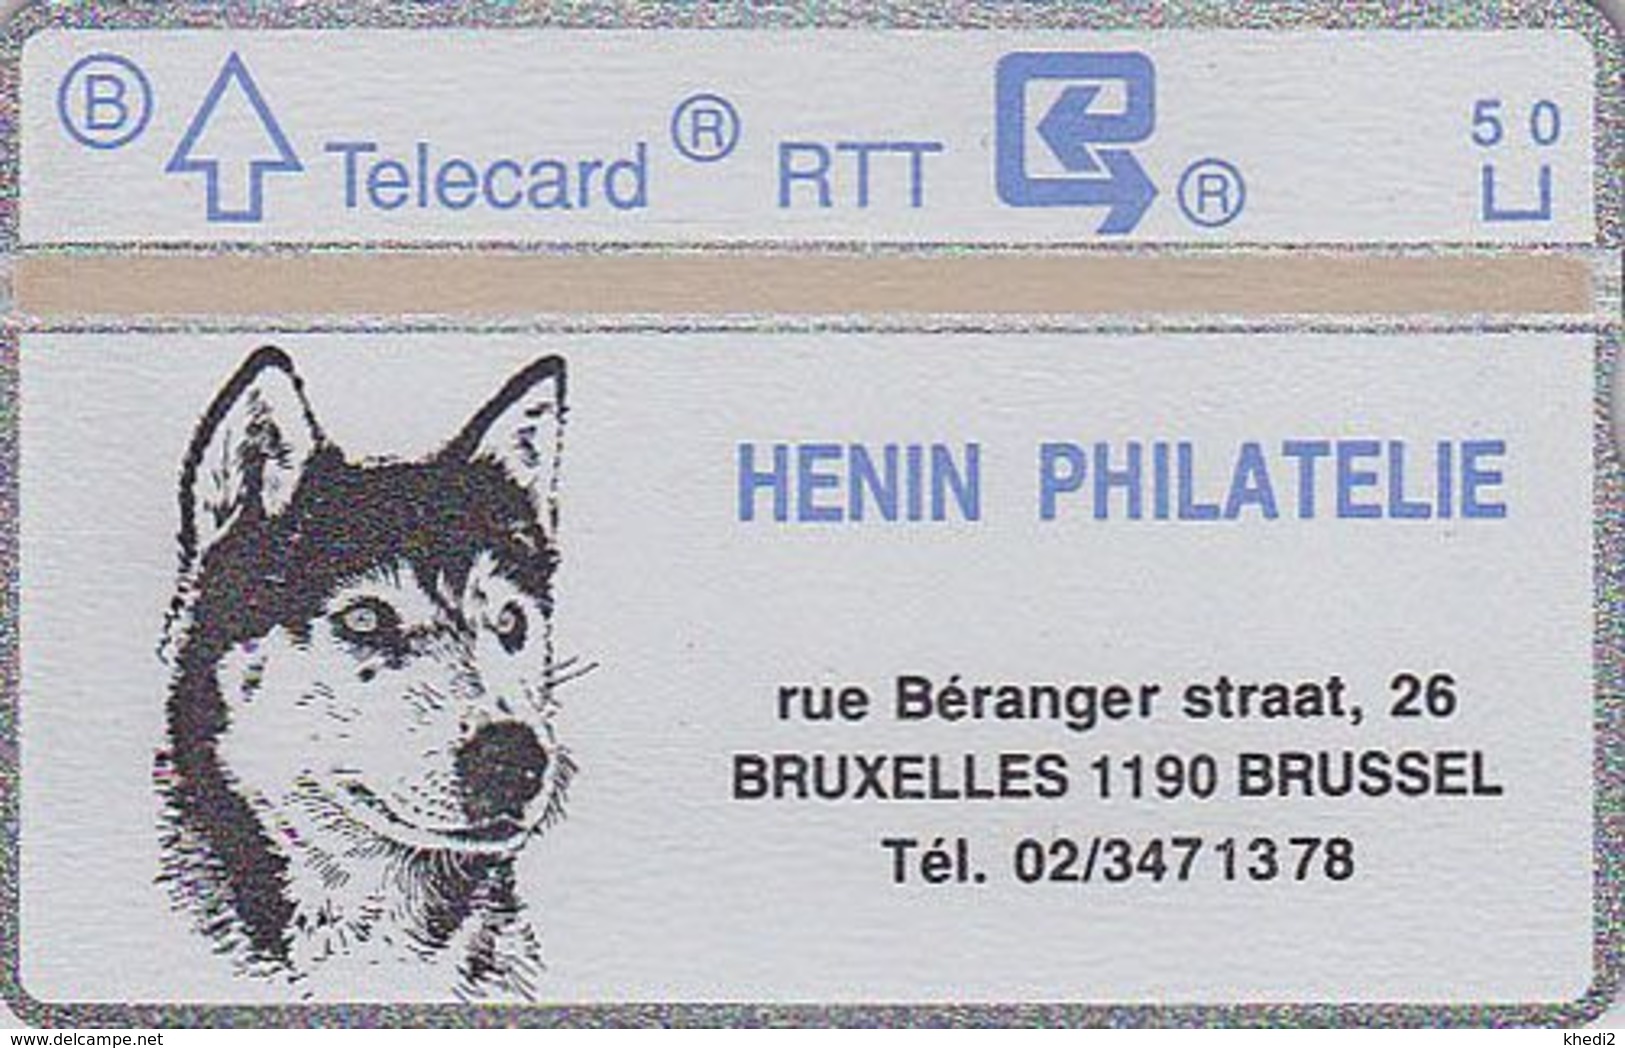 Télécarte Privée De Belgique LG L&G NEUVE - ANIMAL - CHIEN HUSKY  - DOG MINT Phonecard - HUND Telefonkarte - 588 - Ohne Chip